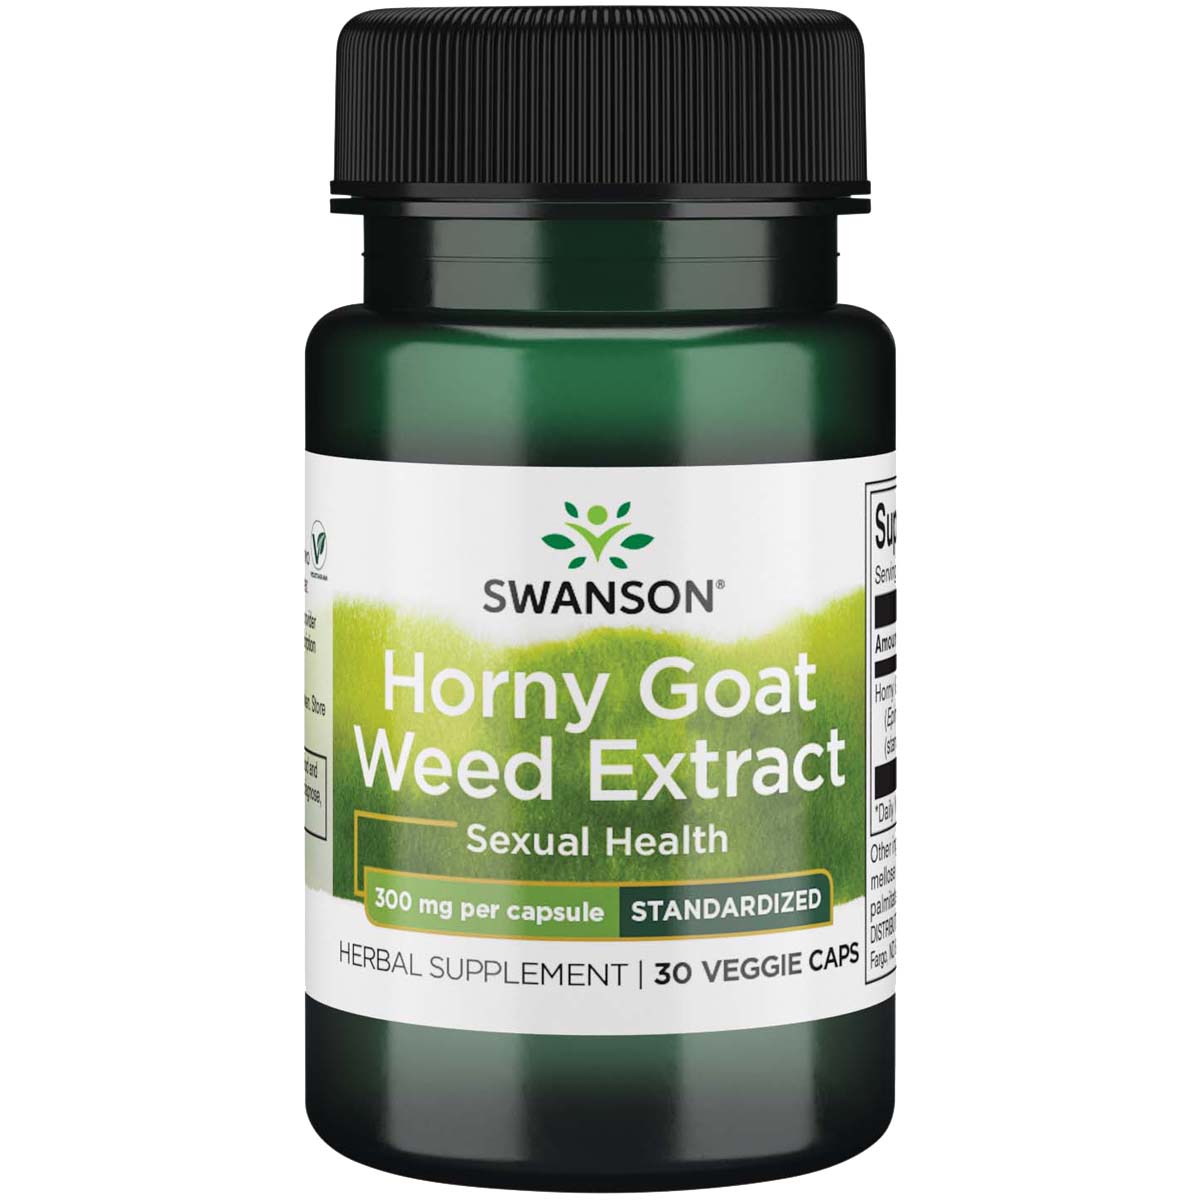 Swanson Horny Goat Weed Extract Standardized, 300 mg, 30 Veggie Capsules